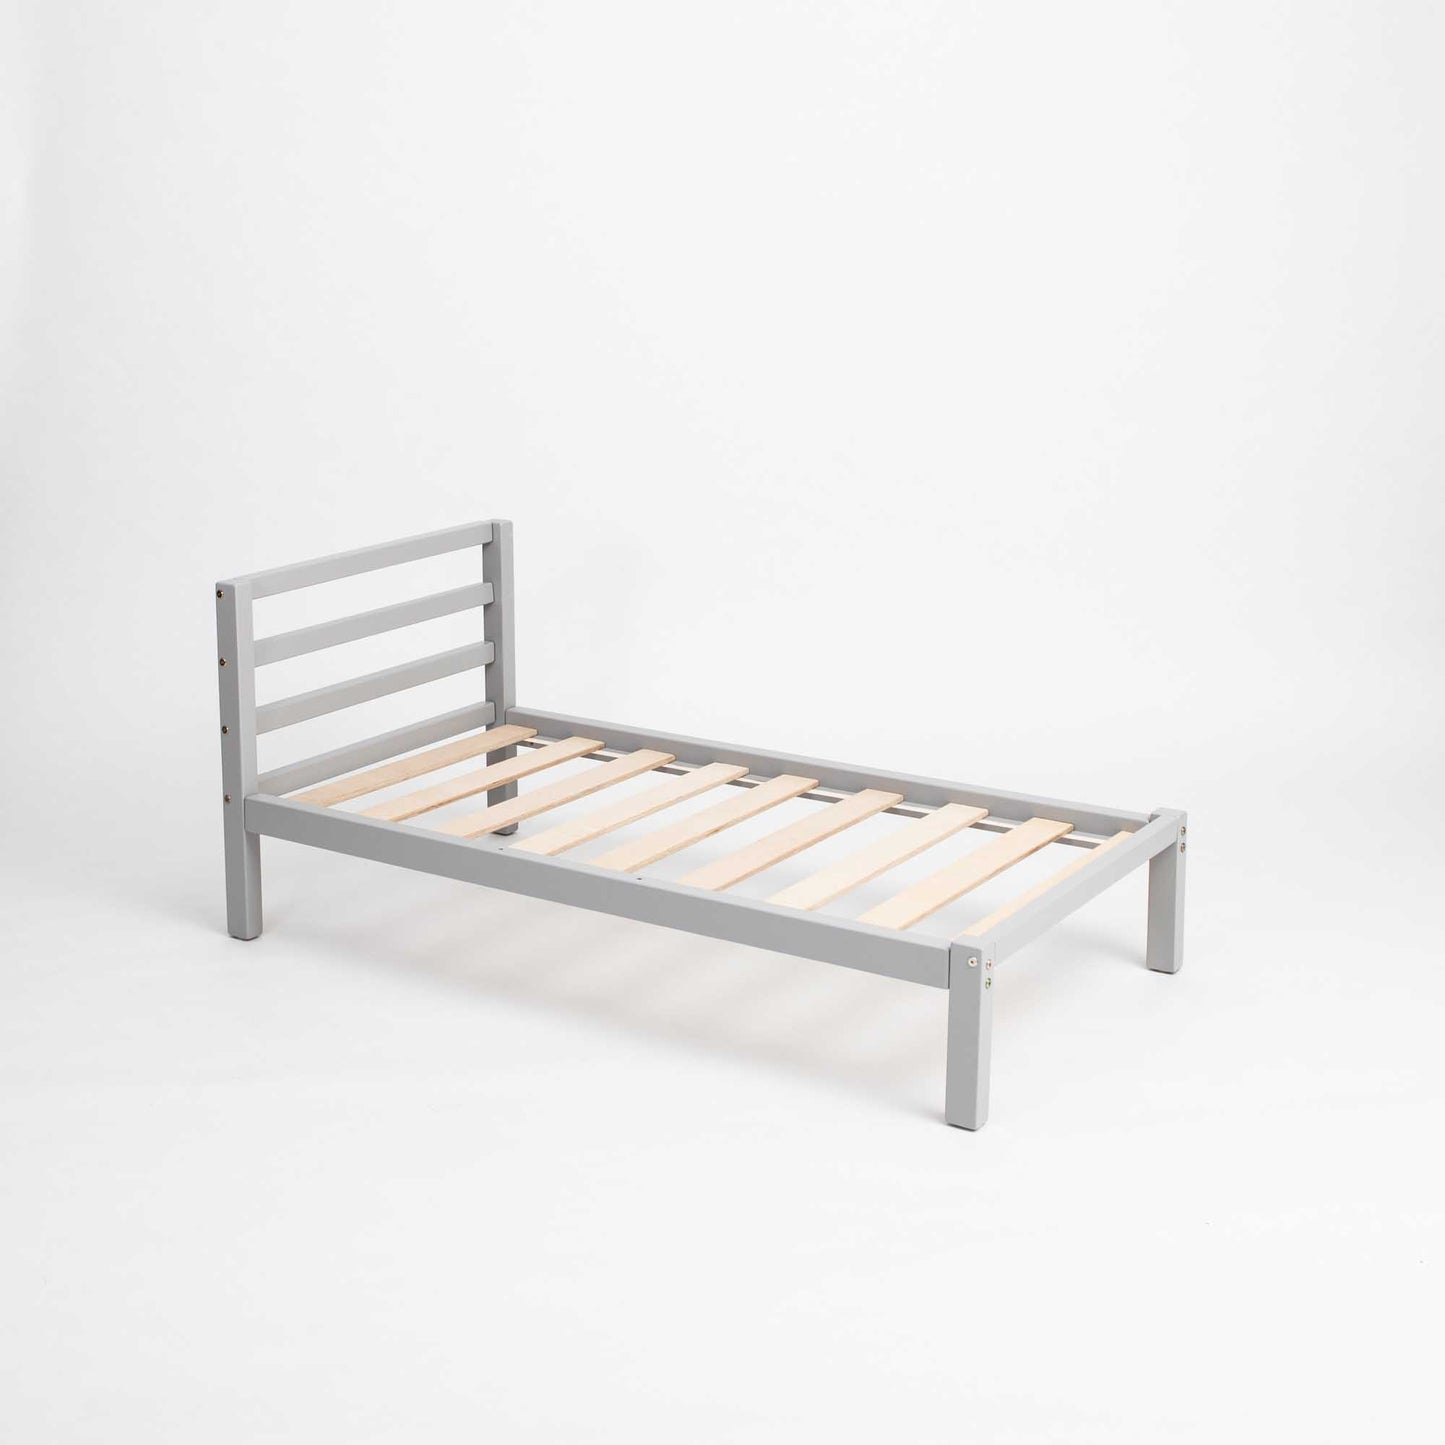 Kids' bed on legs with a horizontal rail headboard